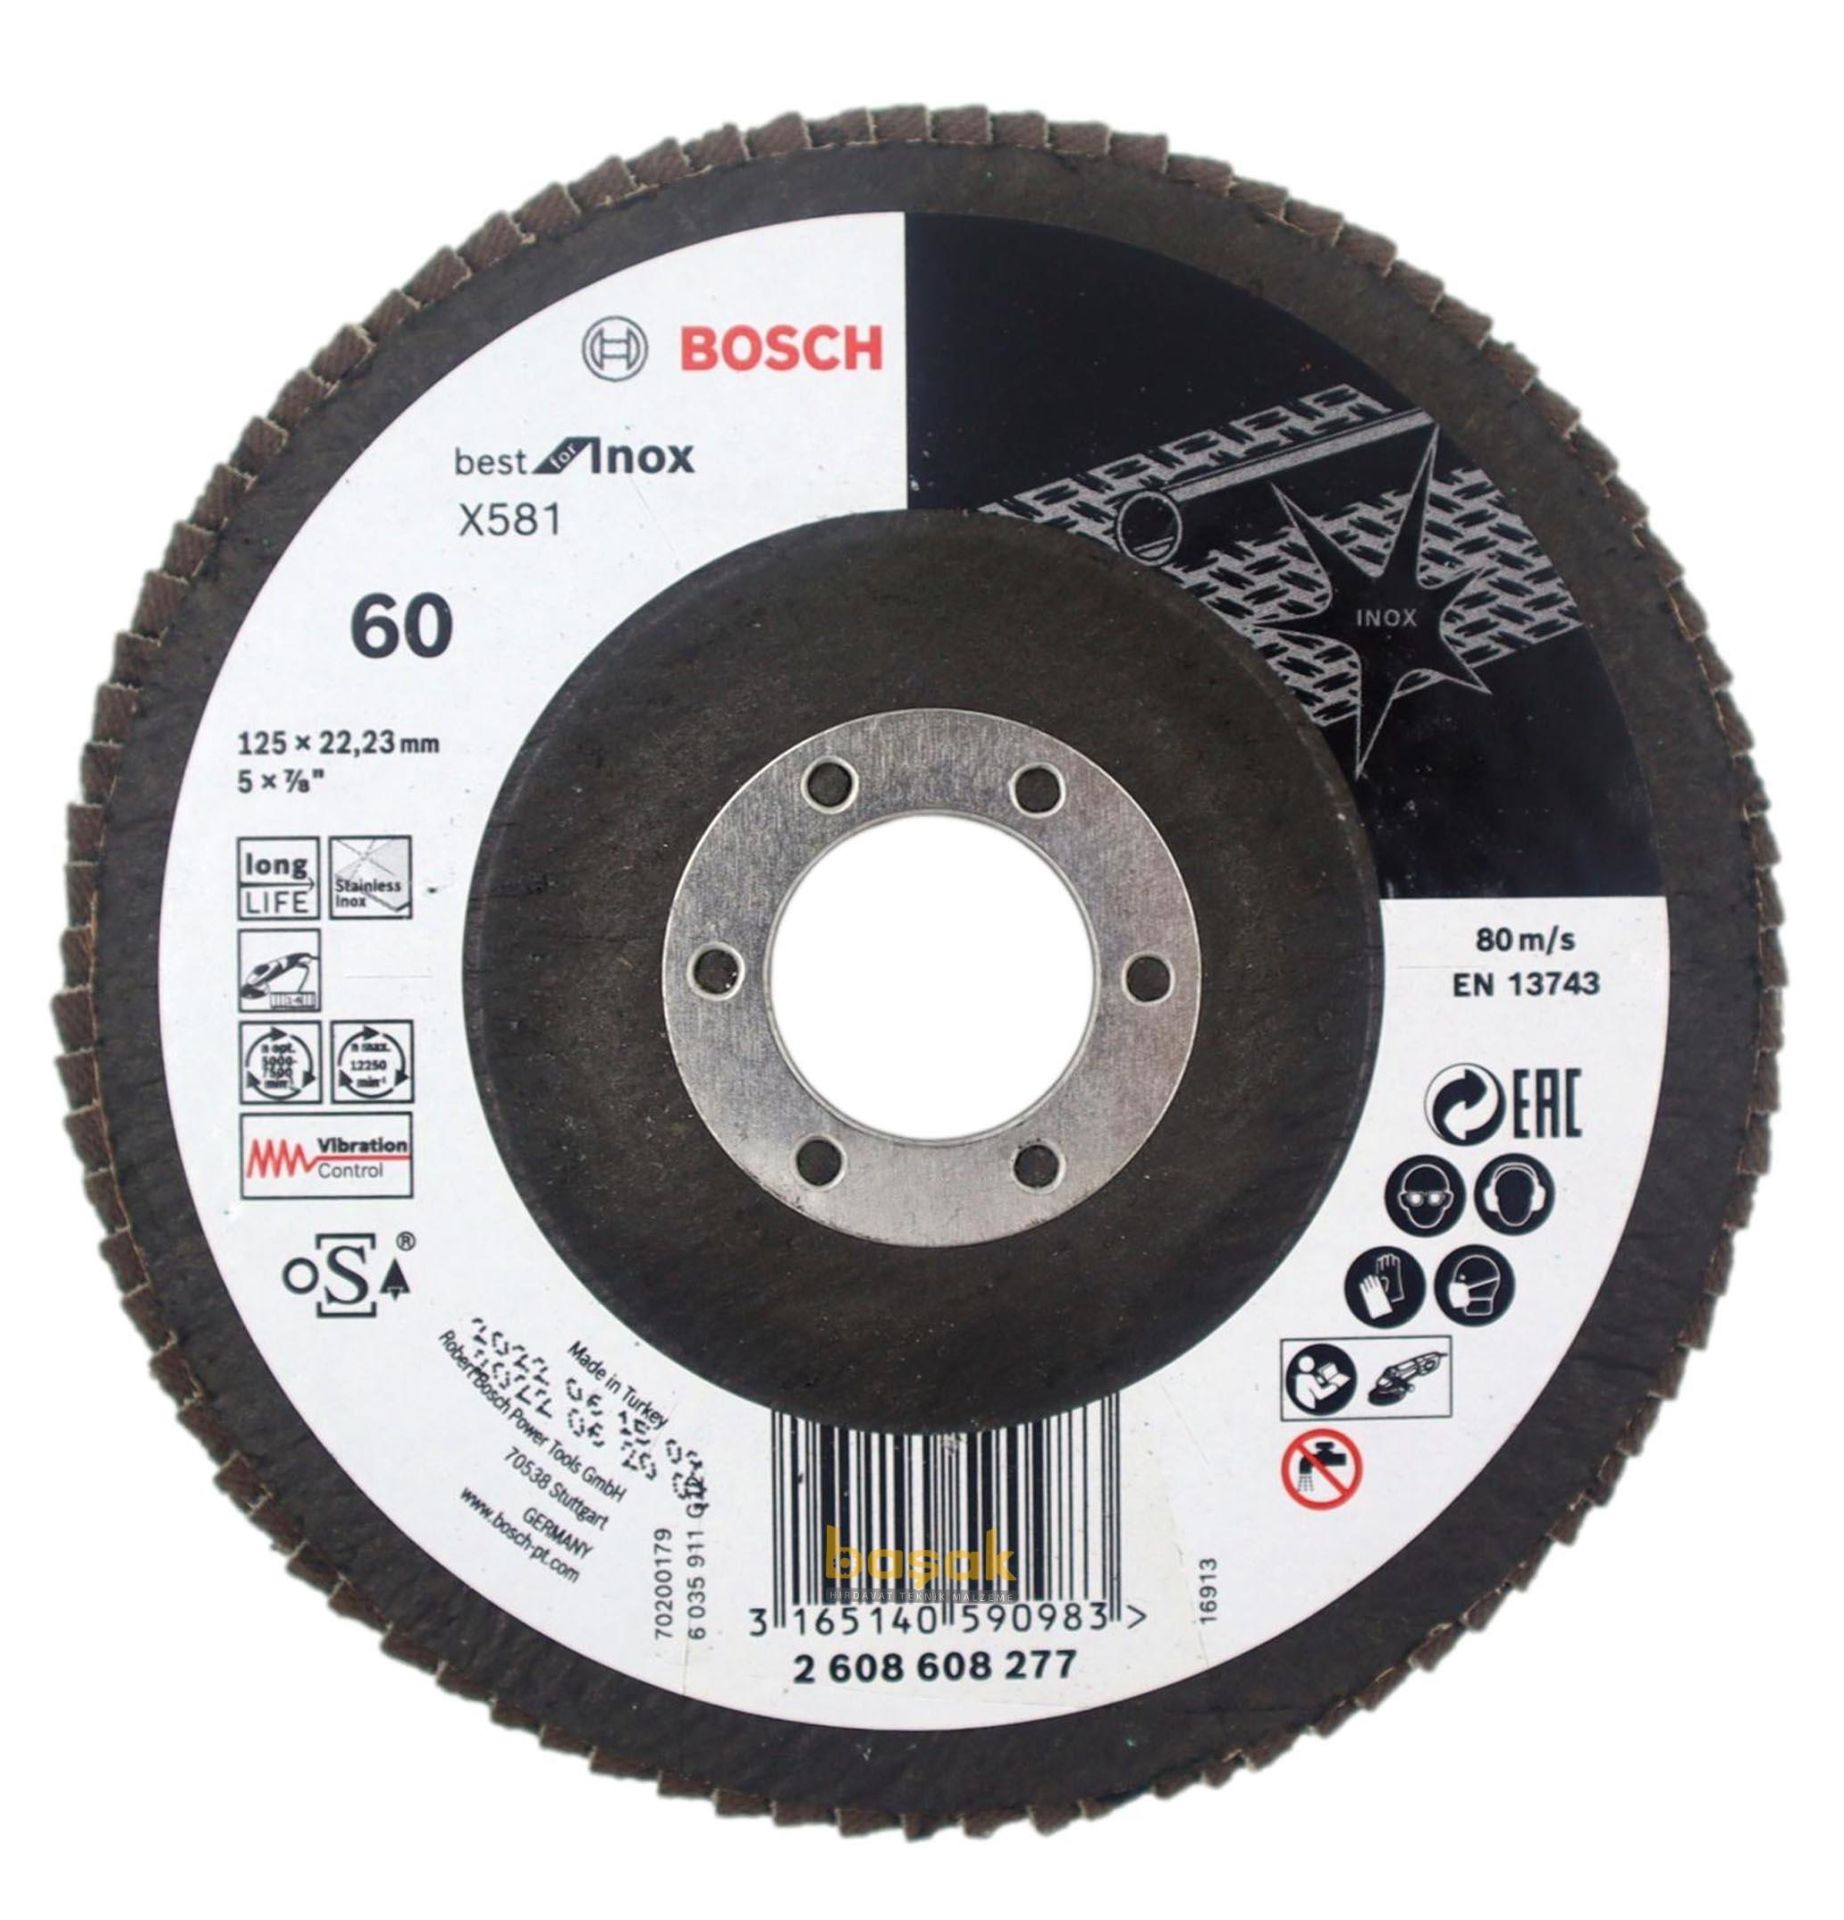 Bosch 125 mm 60 Kum X581 Best Inox Flap Disk 2608608277